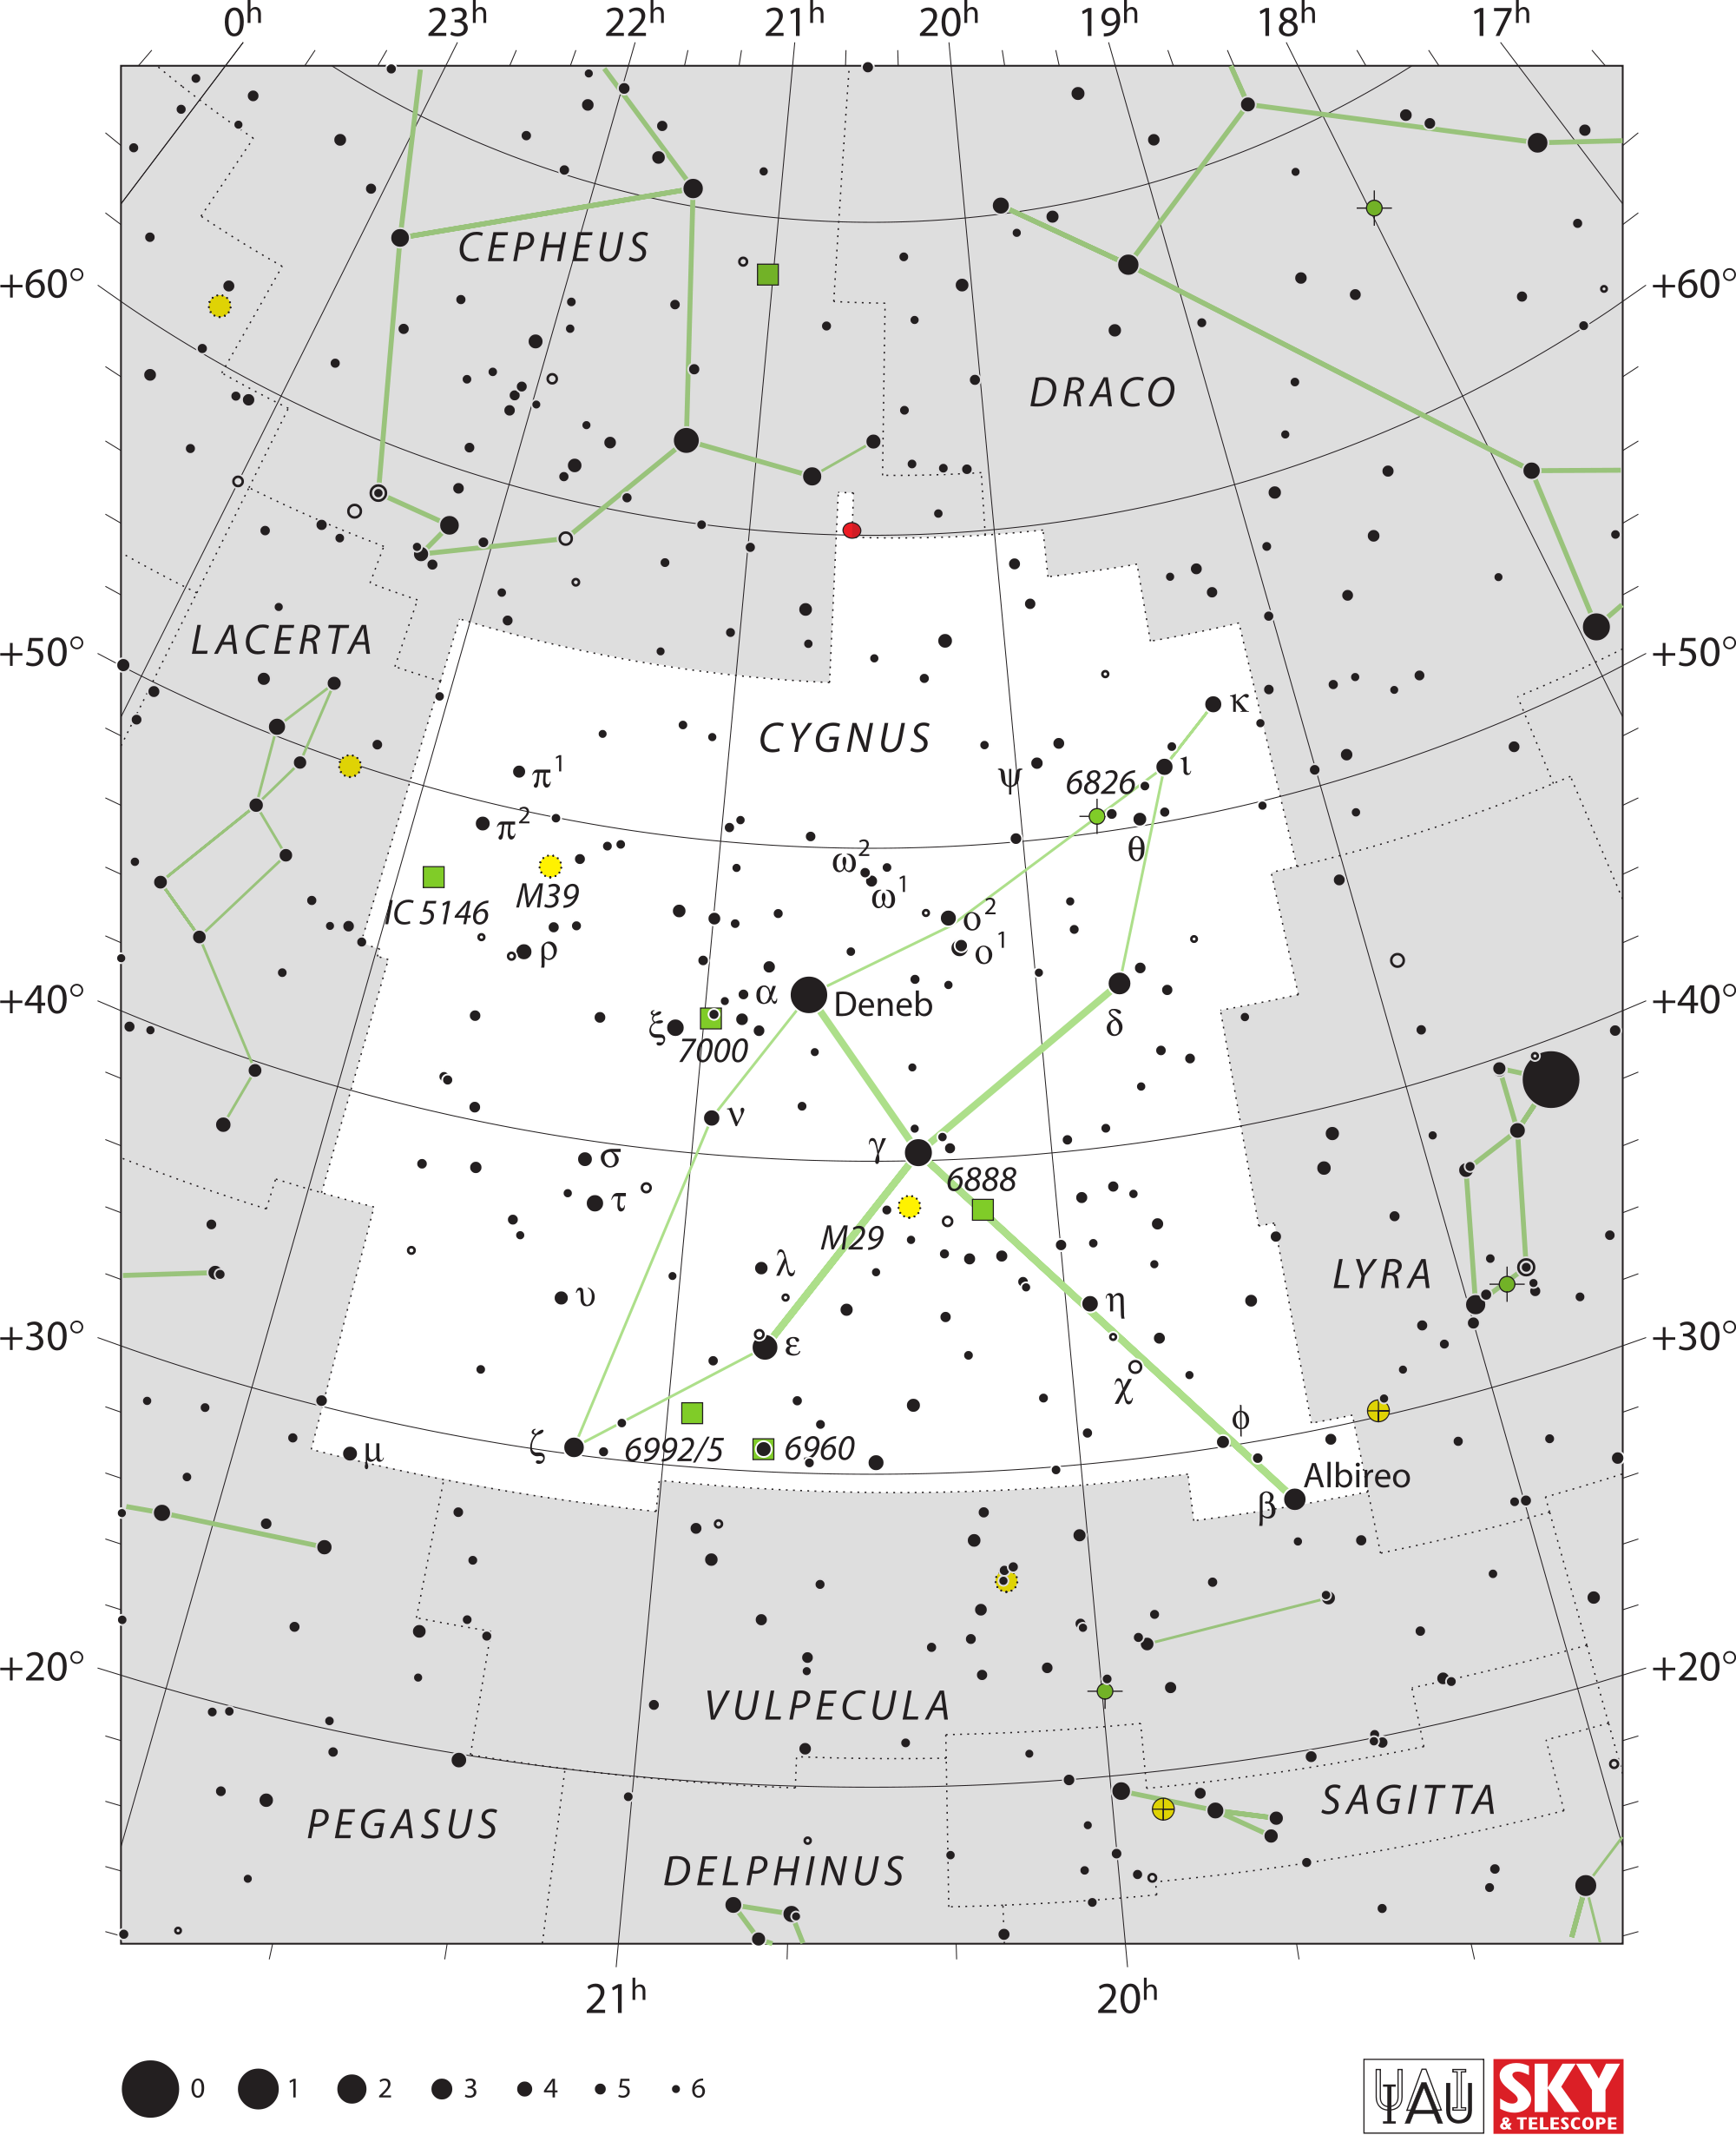 Cygnus (constellation) - Wikipedia